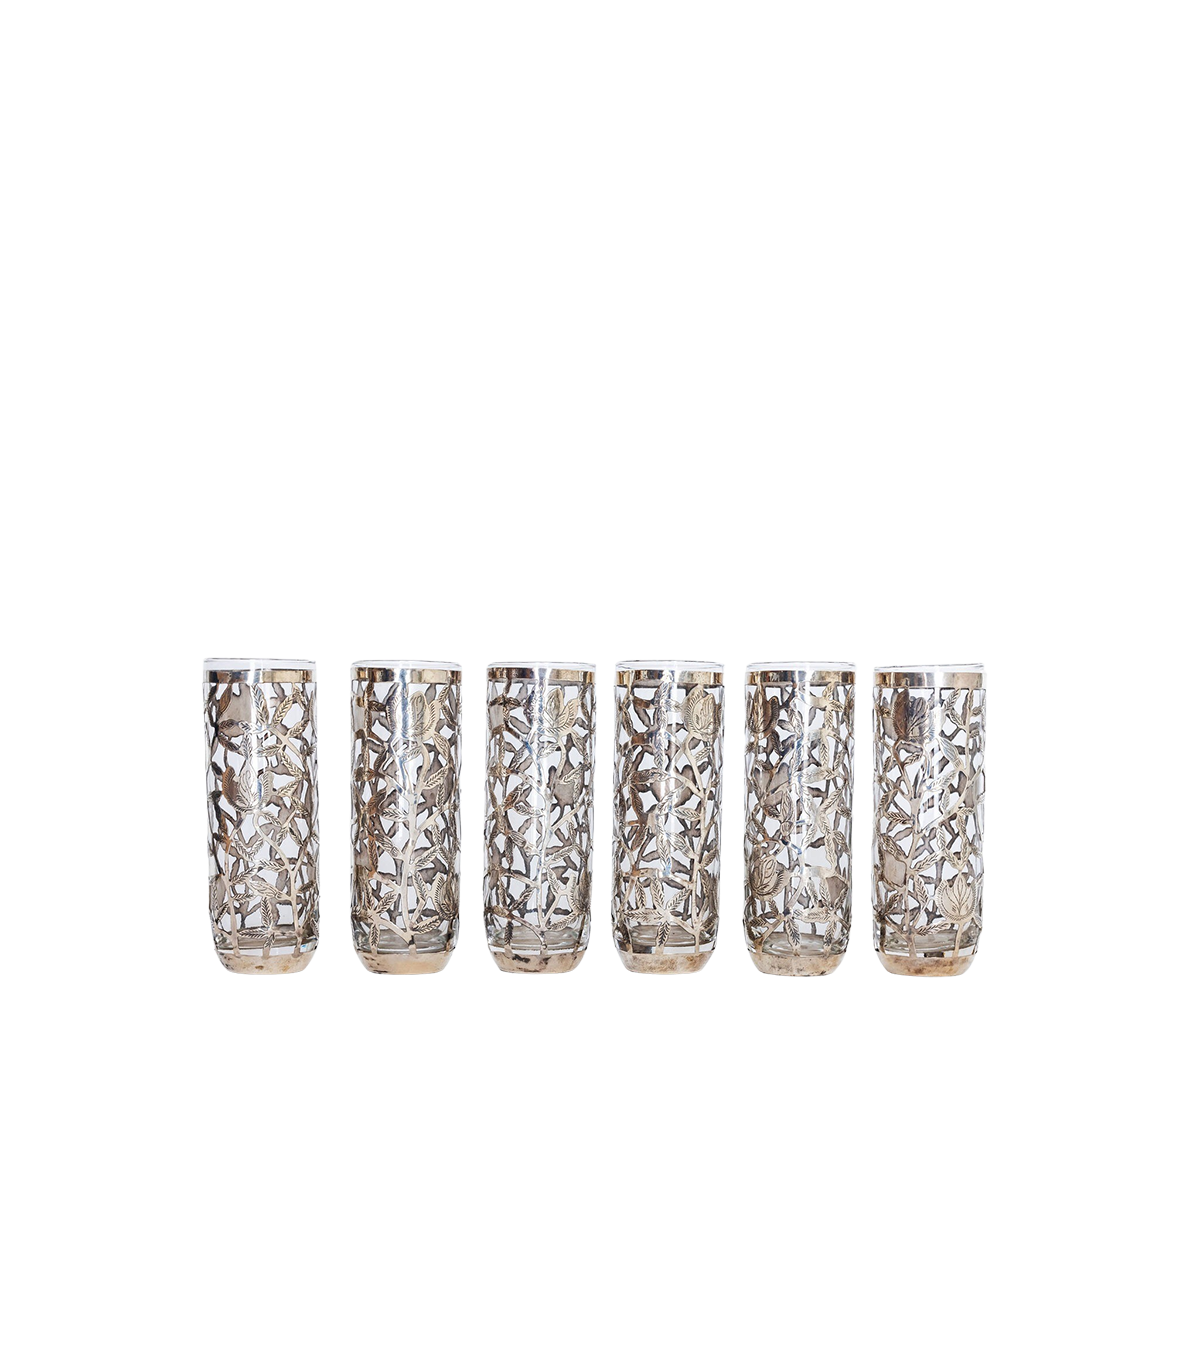 BAMxMC Vintage Sterling Silver Overlay Cocktail Glasses - Set of 6